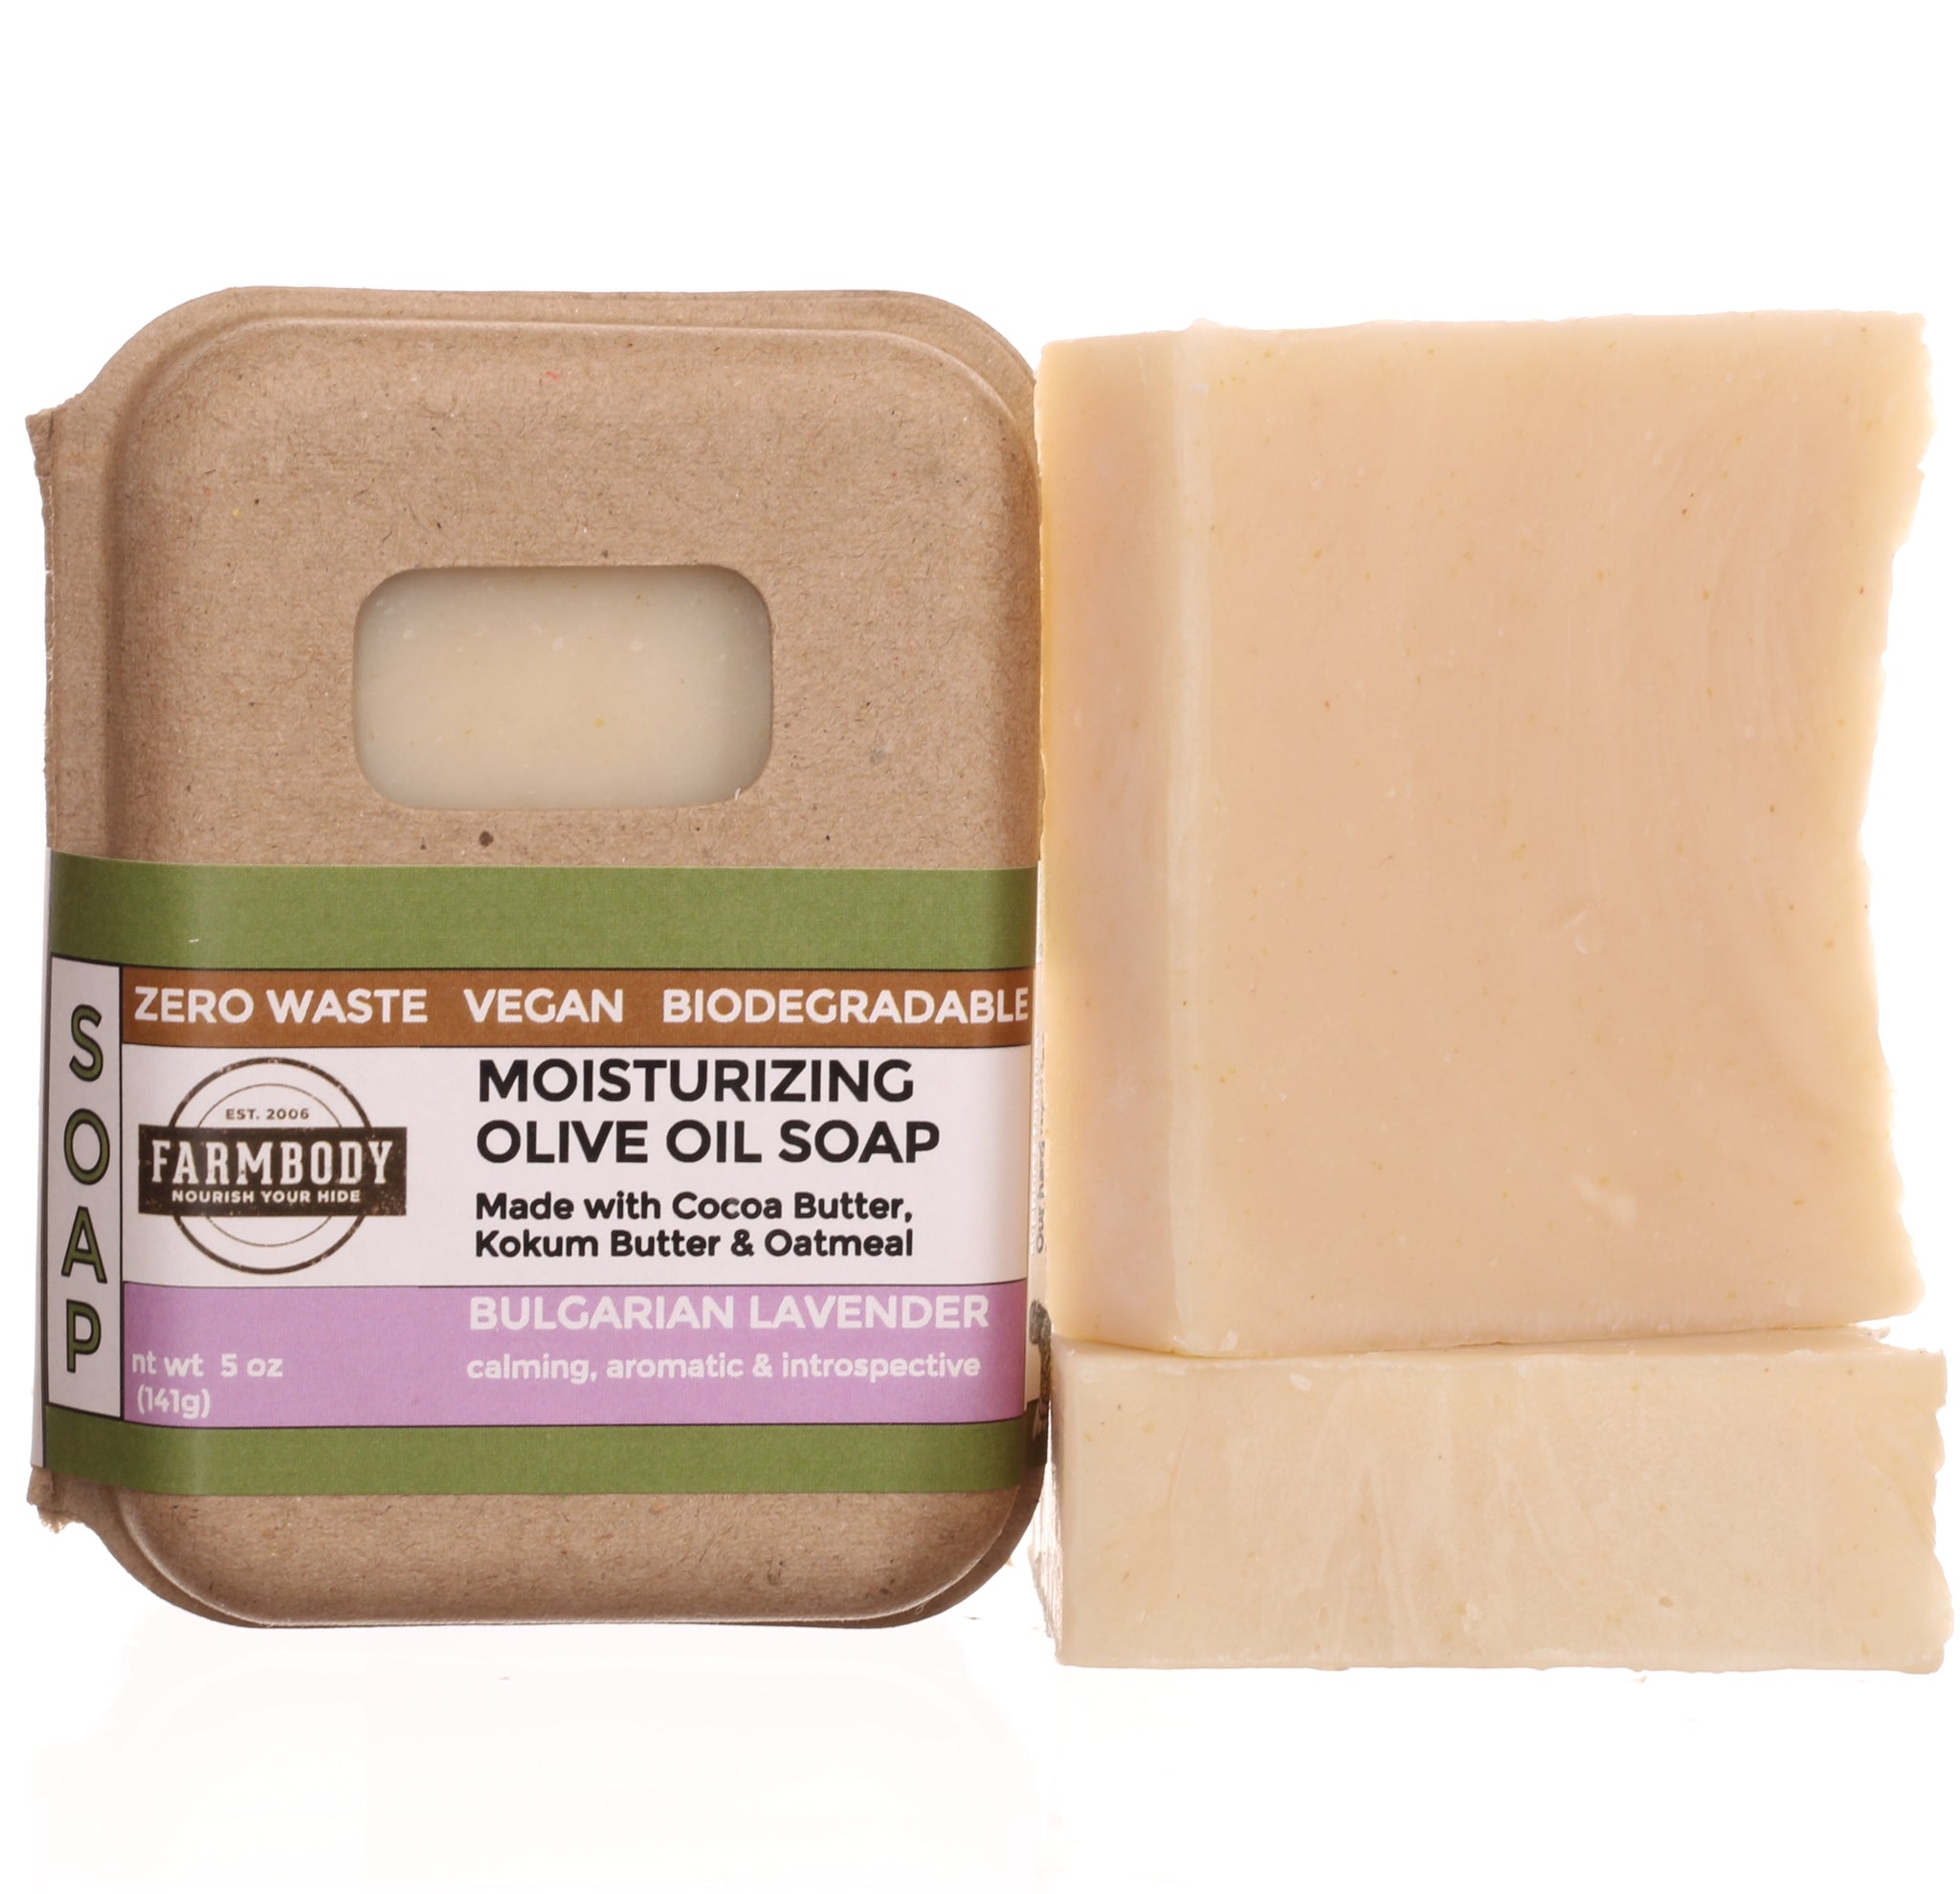 Moisturizing Vegan Olive Oil Soap Benefits for Dry Skin | Bulgarian Lavender - Farmbody